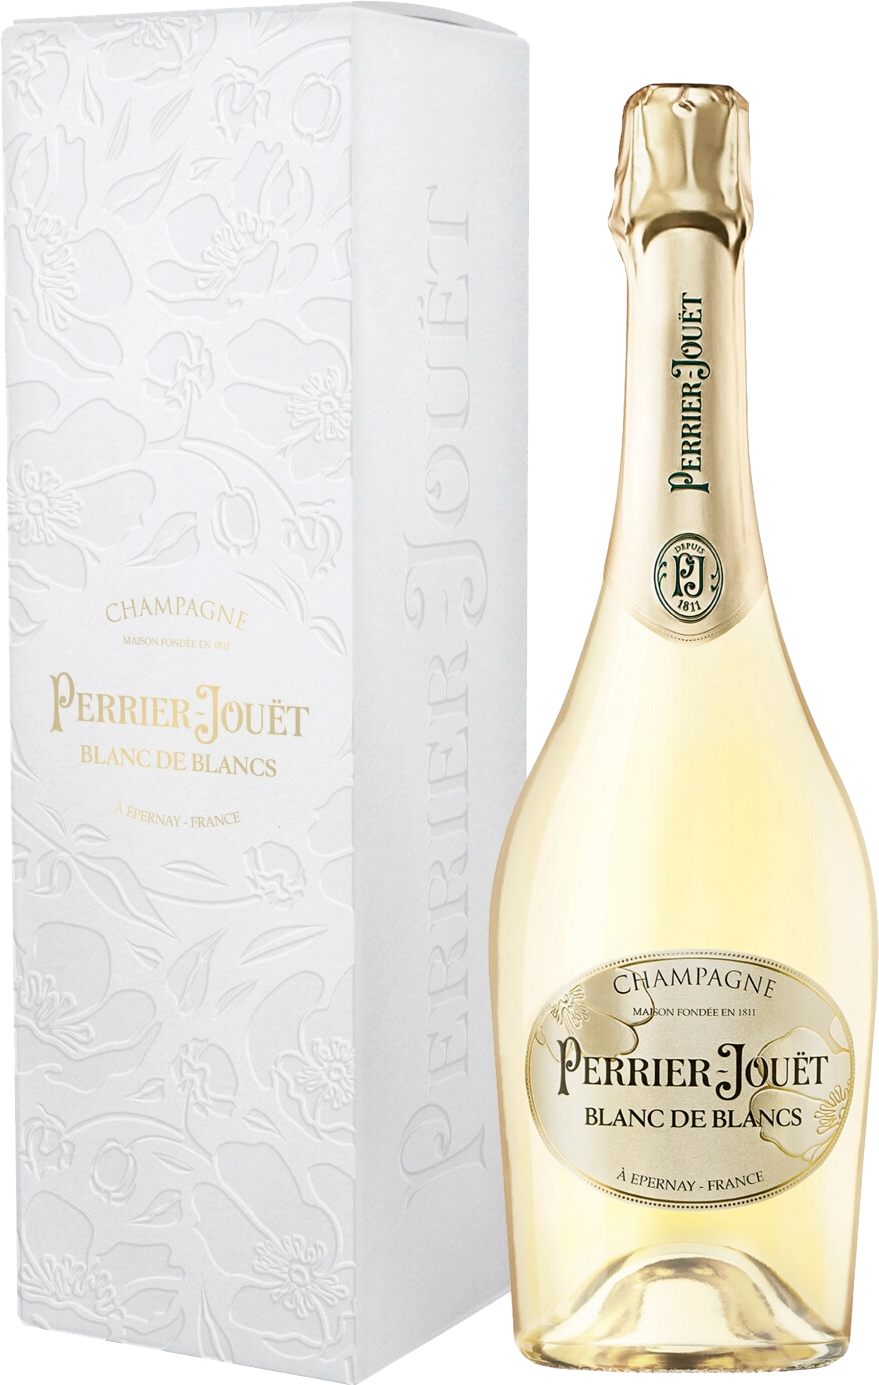 Perrier-Jouet Blanc De Blancs Champagne AOC Brut (gift box) blanc de blancs brut nature grand cru champagne aoс laherte freres gift box